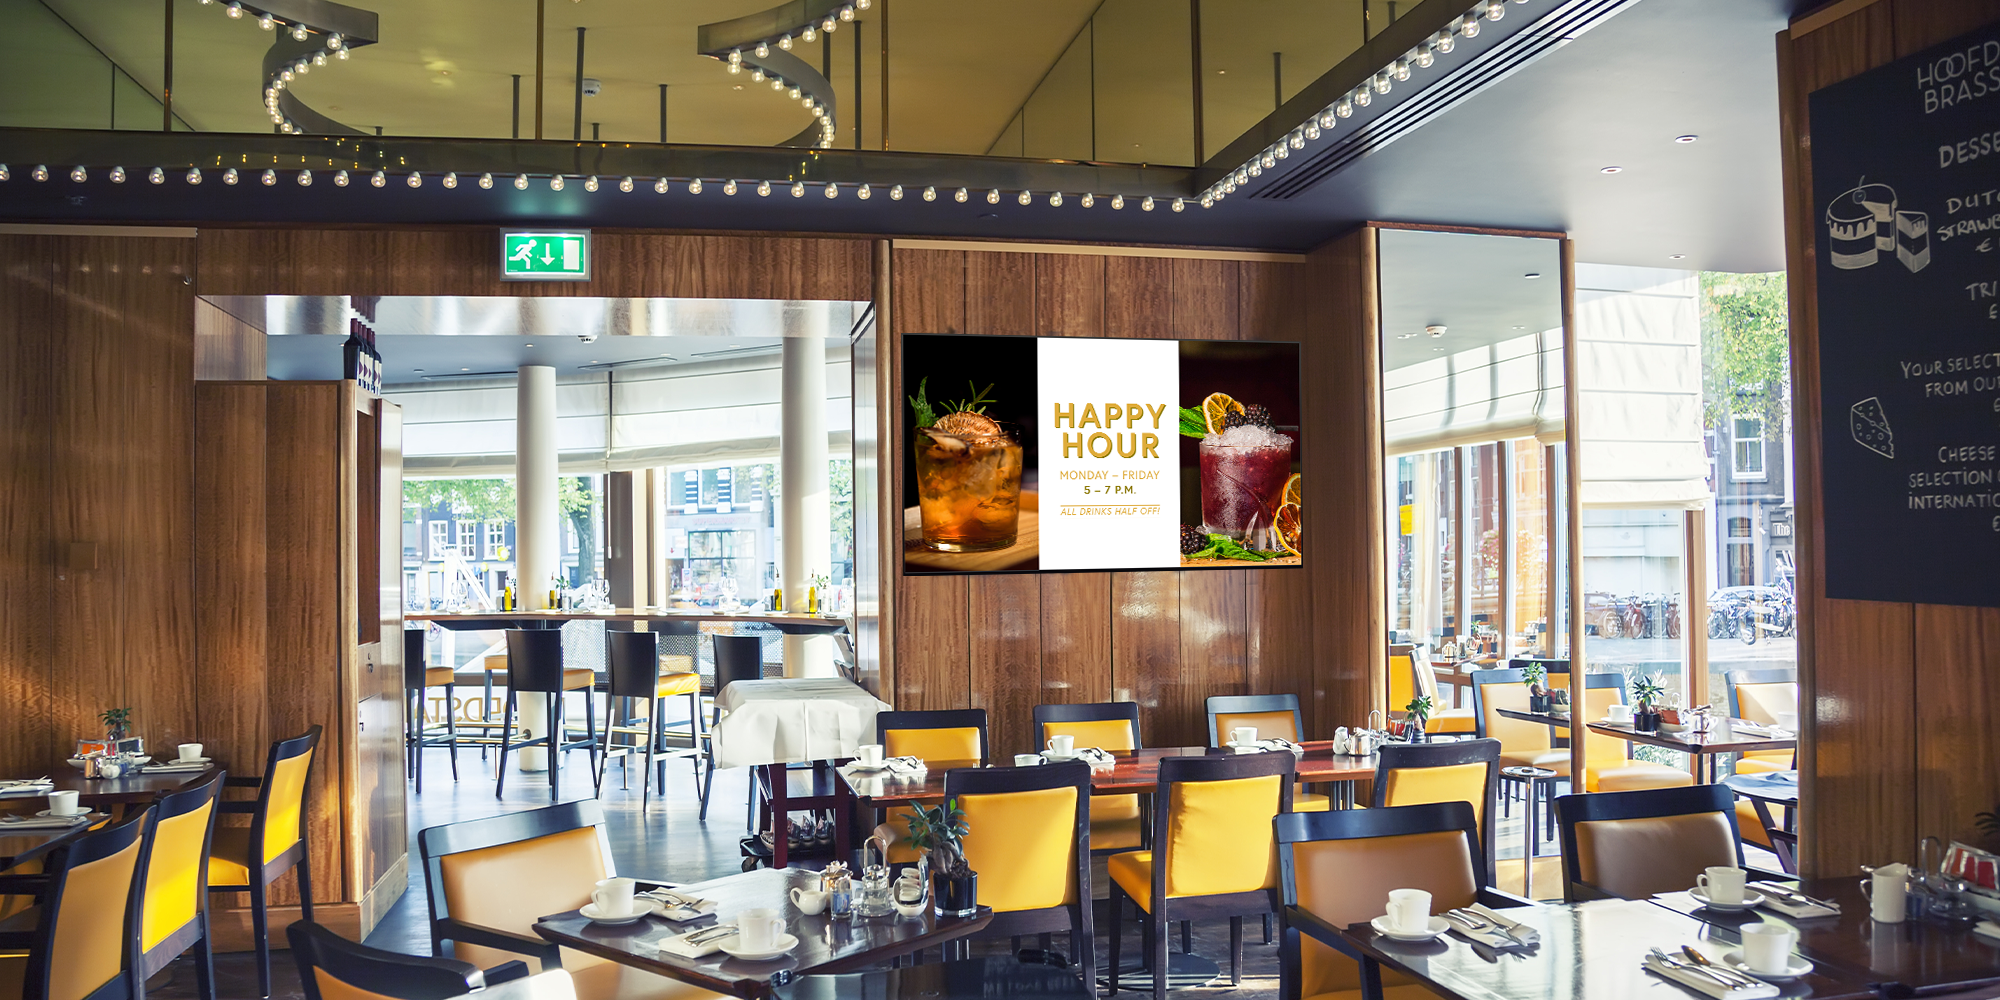 Digital signage on a restaurant TV promoting happy hour